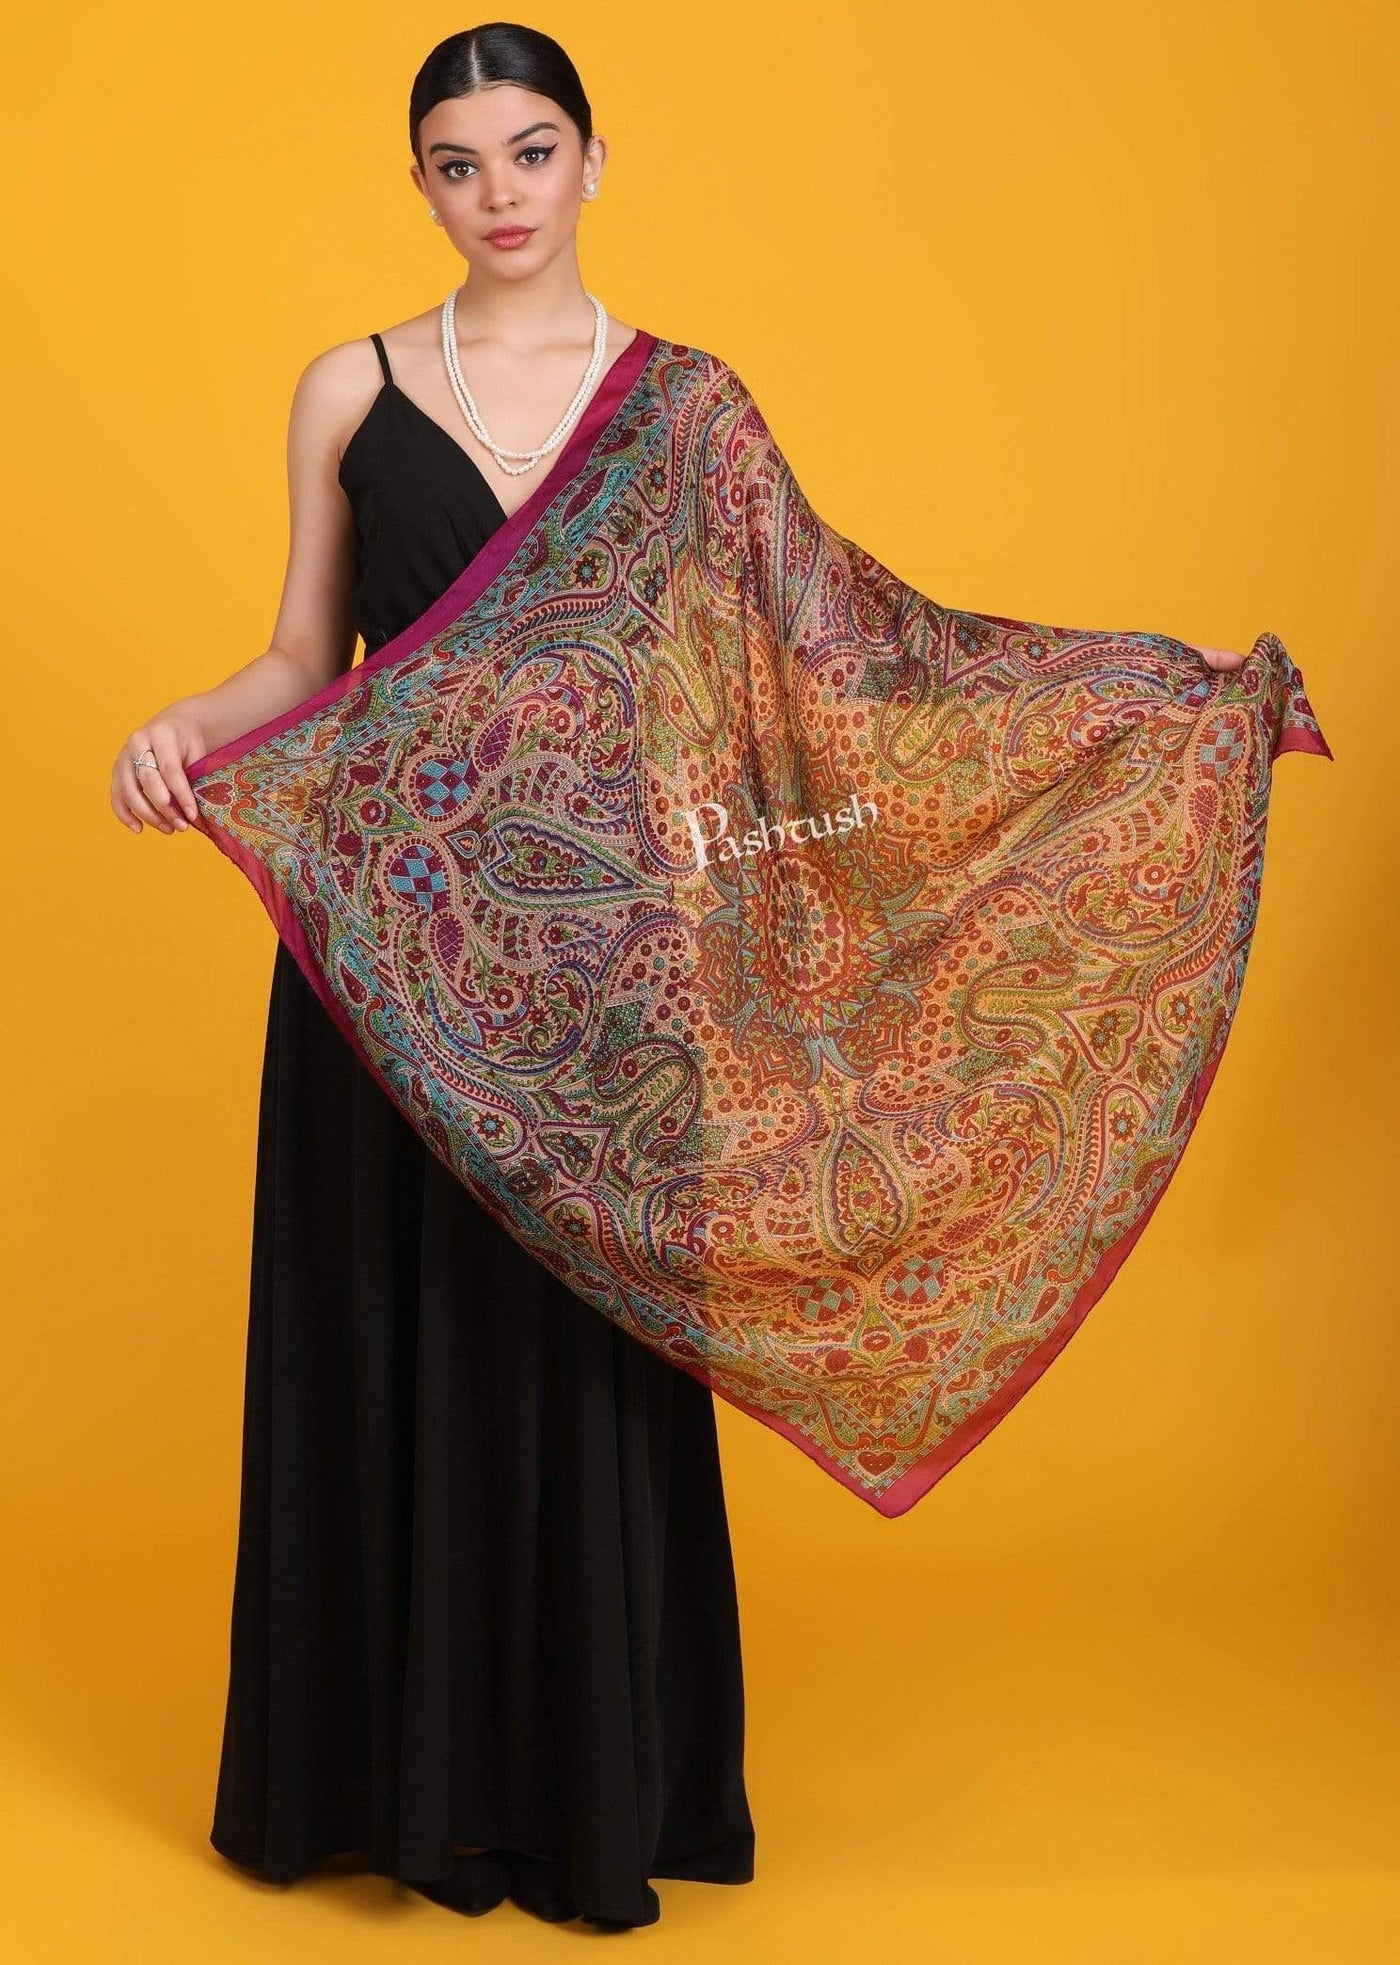 Pashtush India Scarf Pashtush Women's 100% Pure Silk, Printed Scarf, Ultra Soft and Smooth